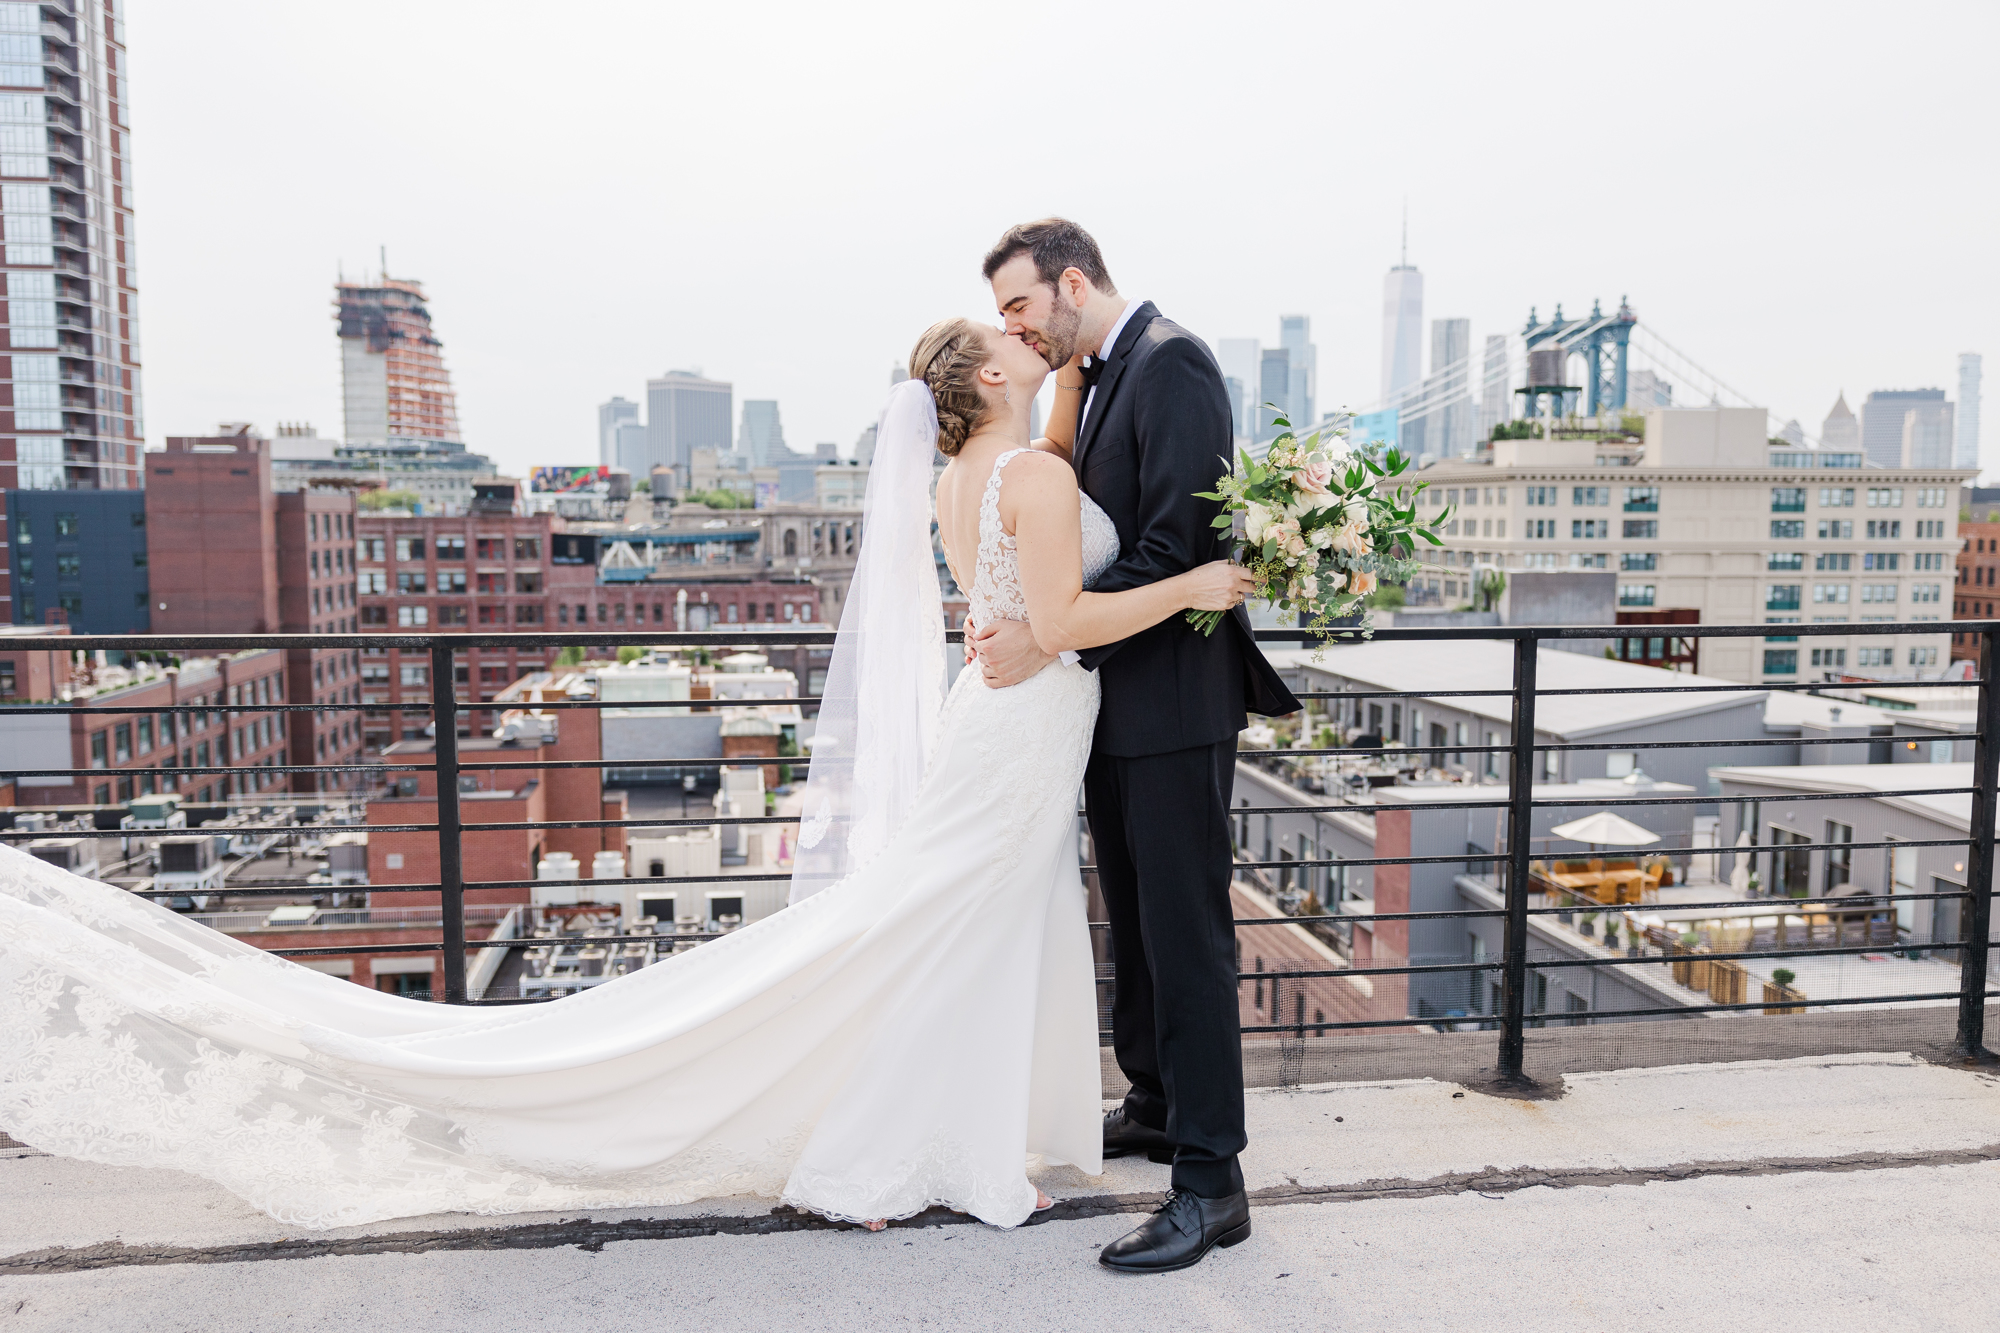 Intimate Brooklyn Wedding Photos at Bridgepoint Featuring the New York City Skyline 